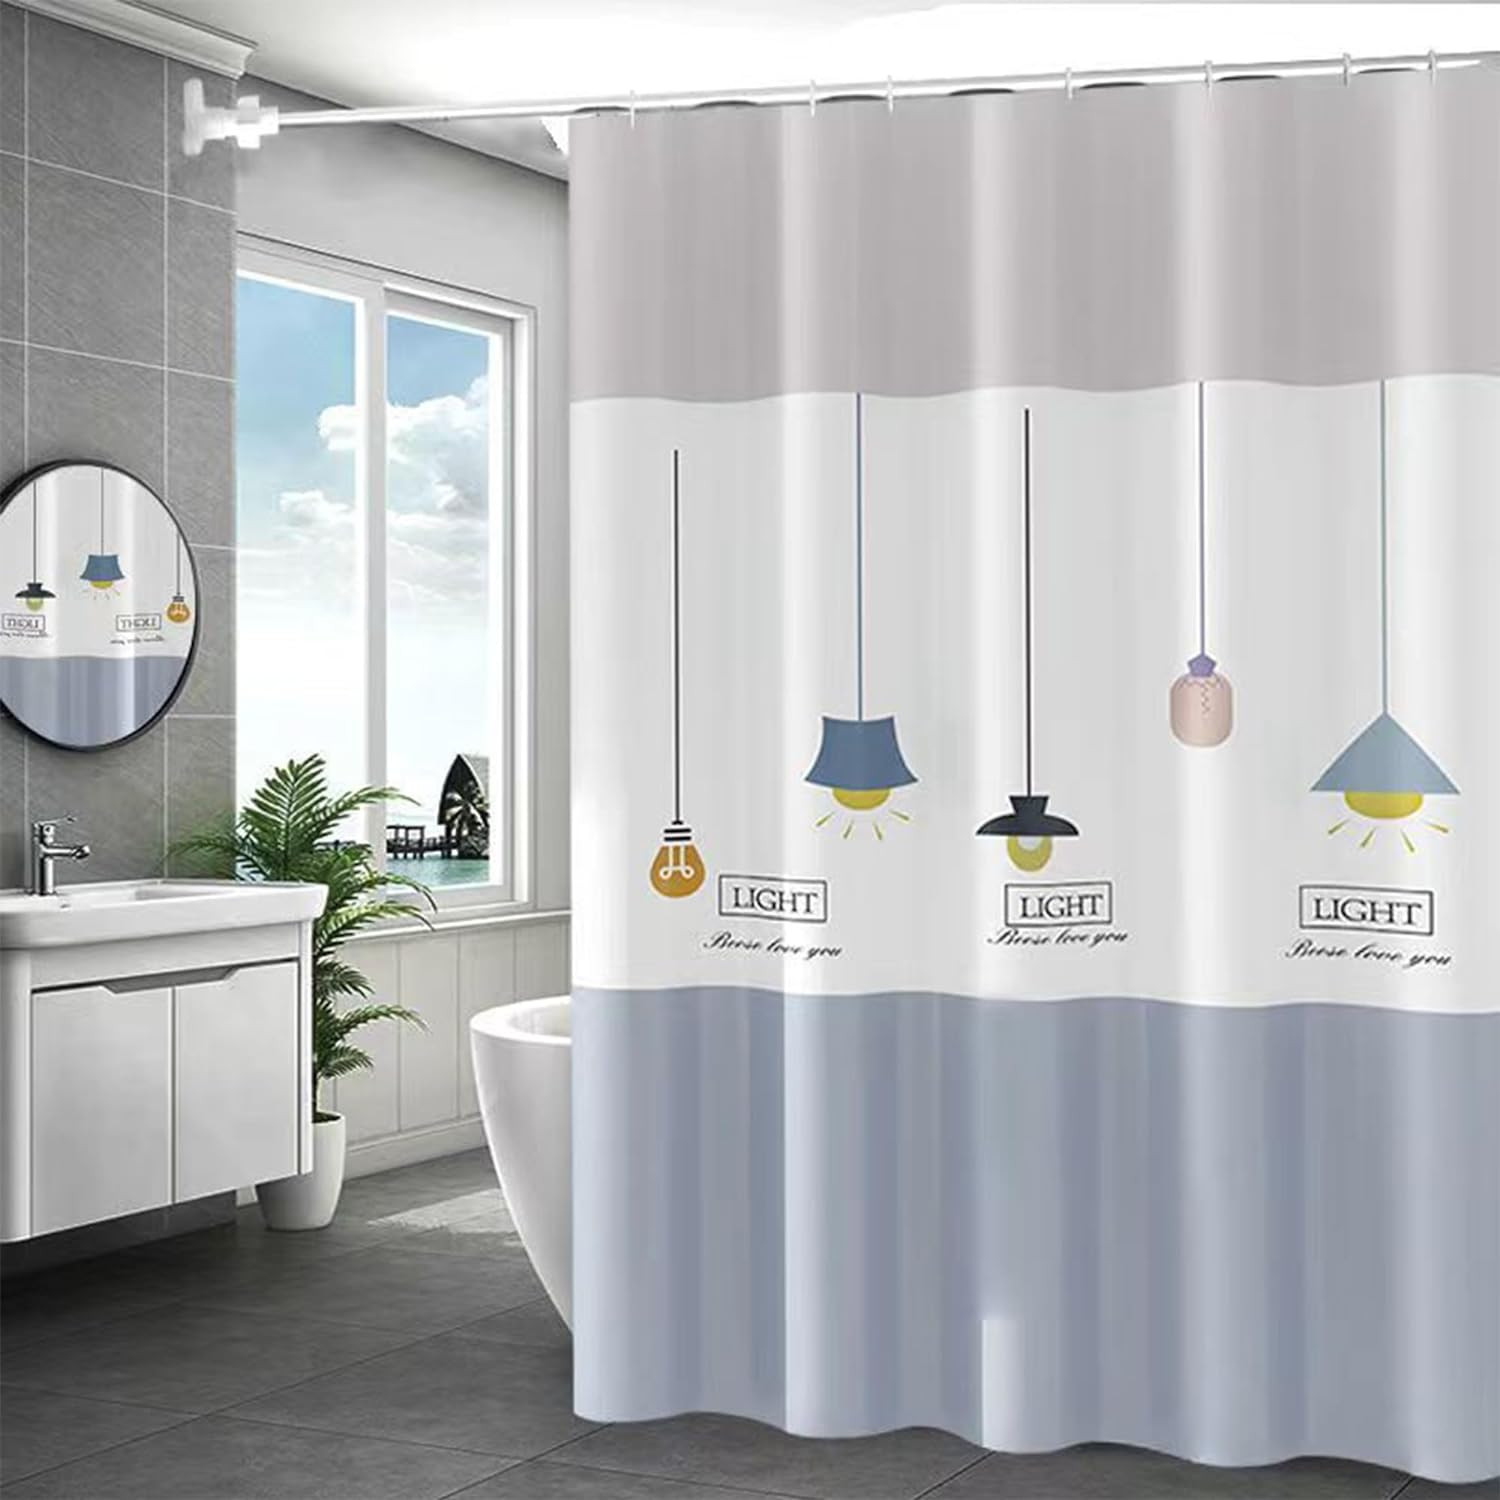 Kuber IndustriesSoft Texture Bath curtain|Natural Drape Waterproof Shower Curtain 6 Feet|Grey